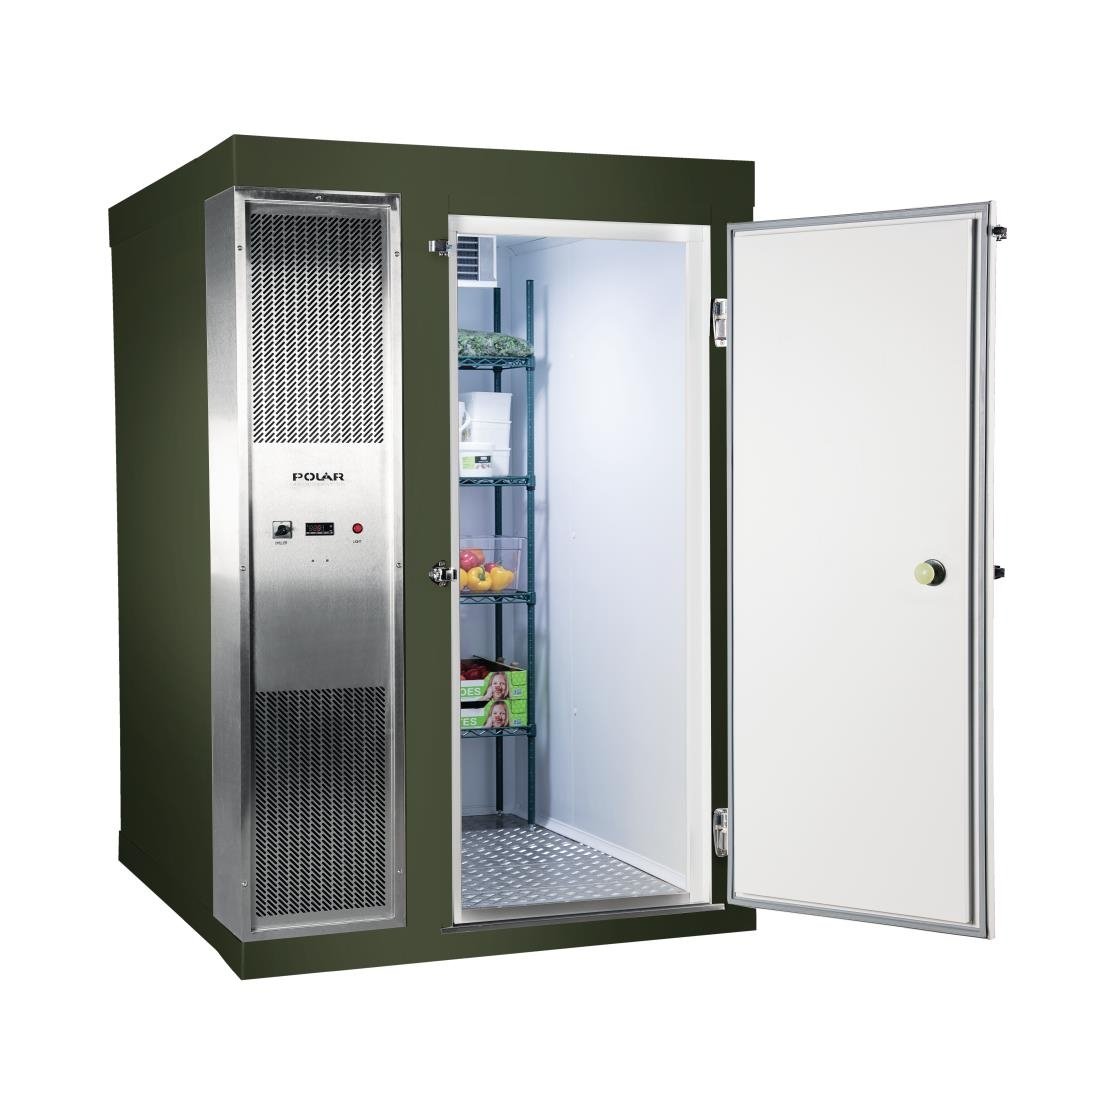 DS484-CGN Polar U-Series 1.8 x 1.5m Integral Walk In Cold Room Green JD Catering Equipment Solutions Ltd